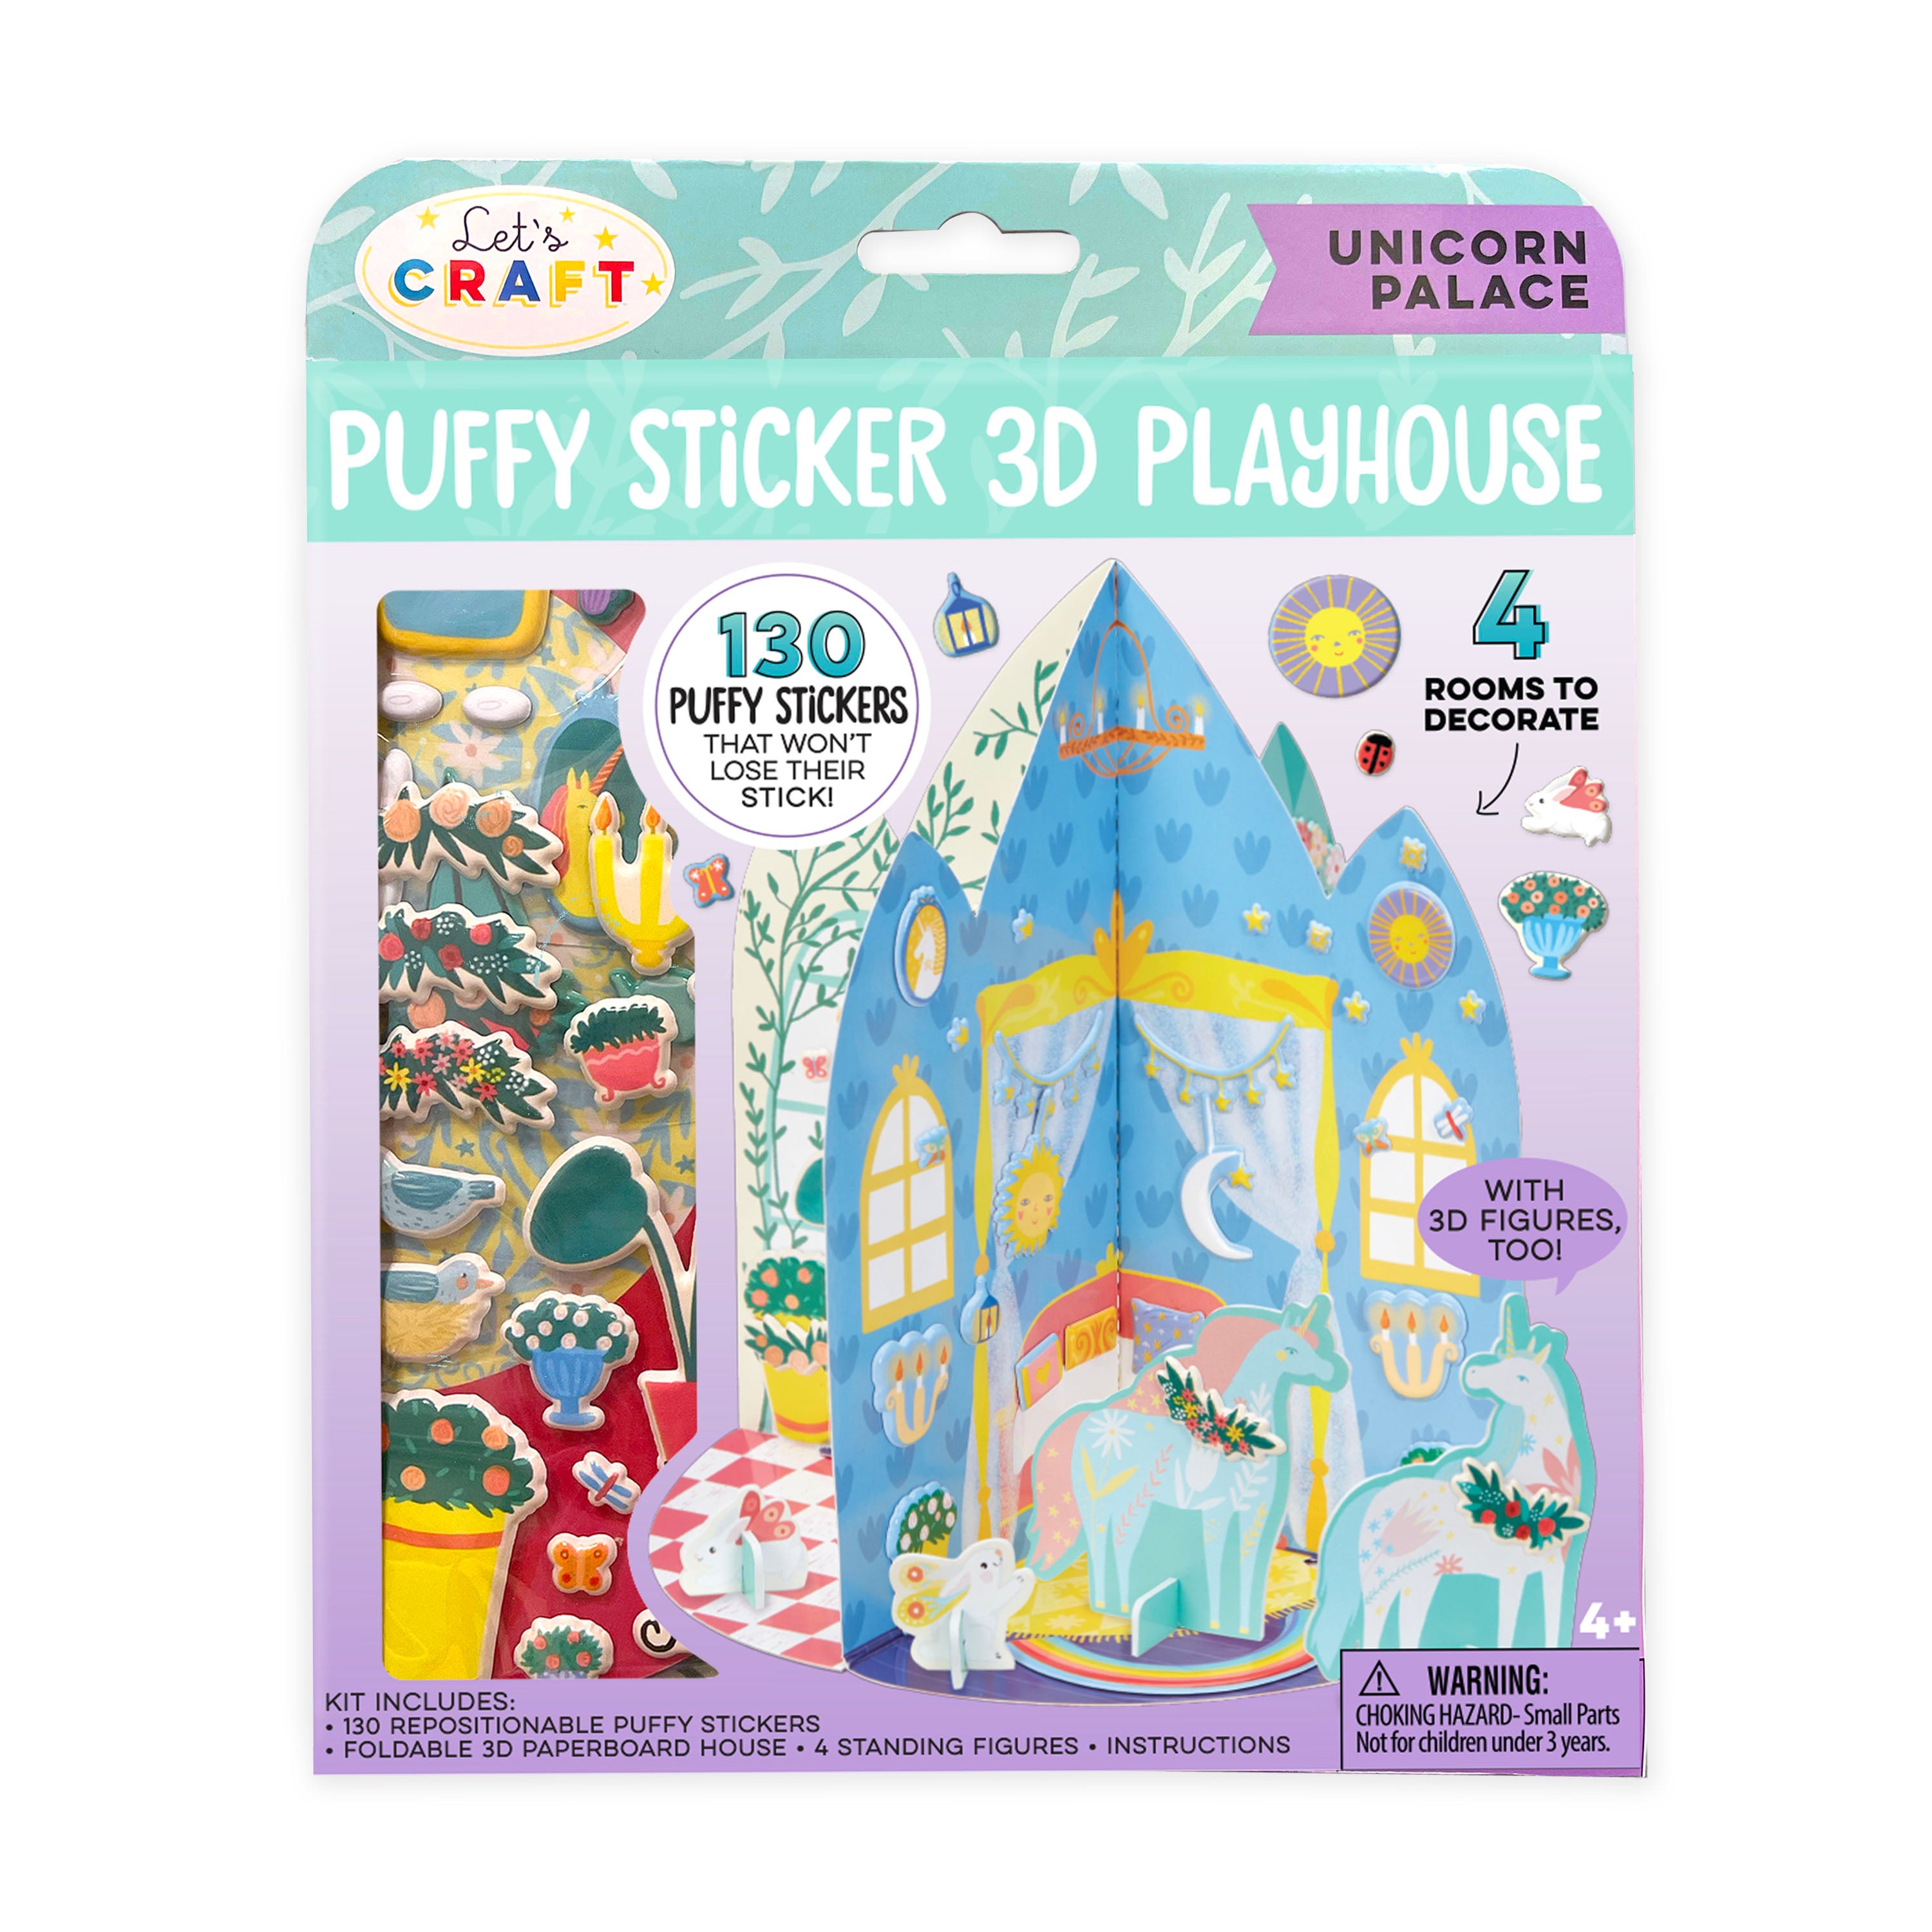 Puffy Sticker 3D Playhouse Unicorn Palace – brightstripes